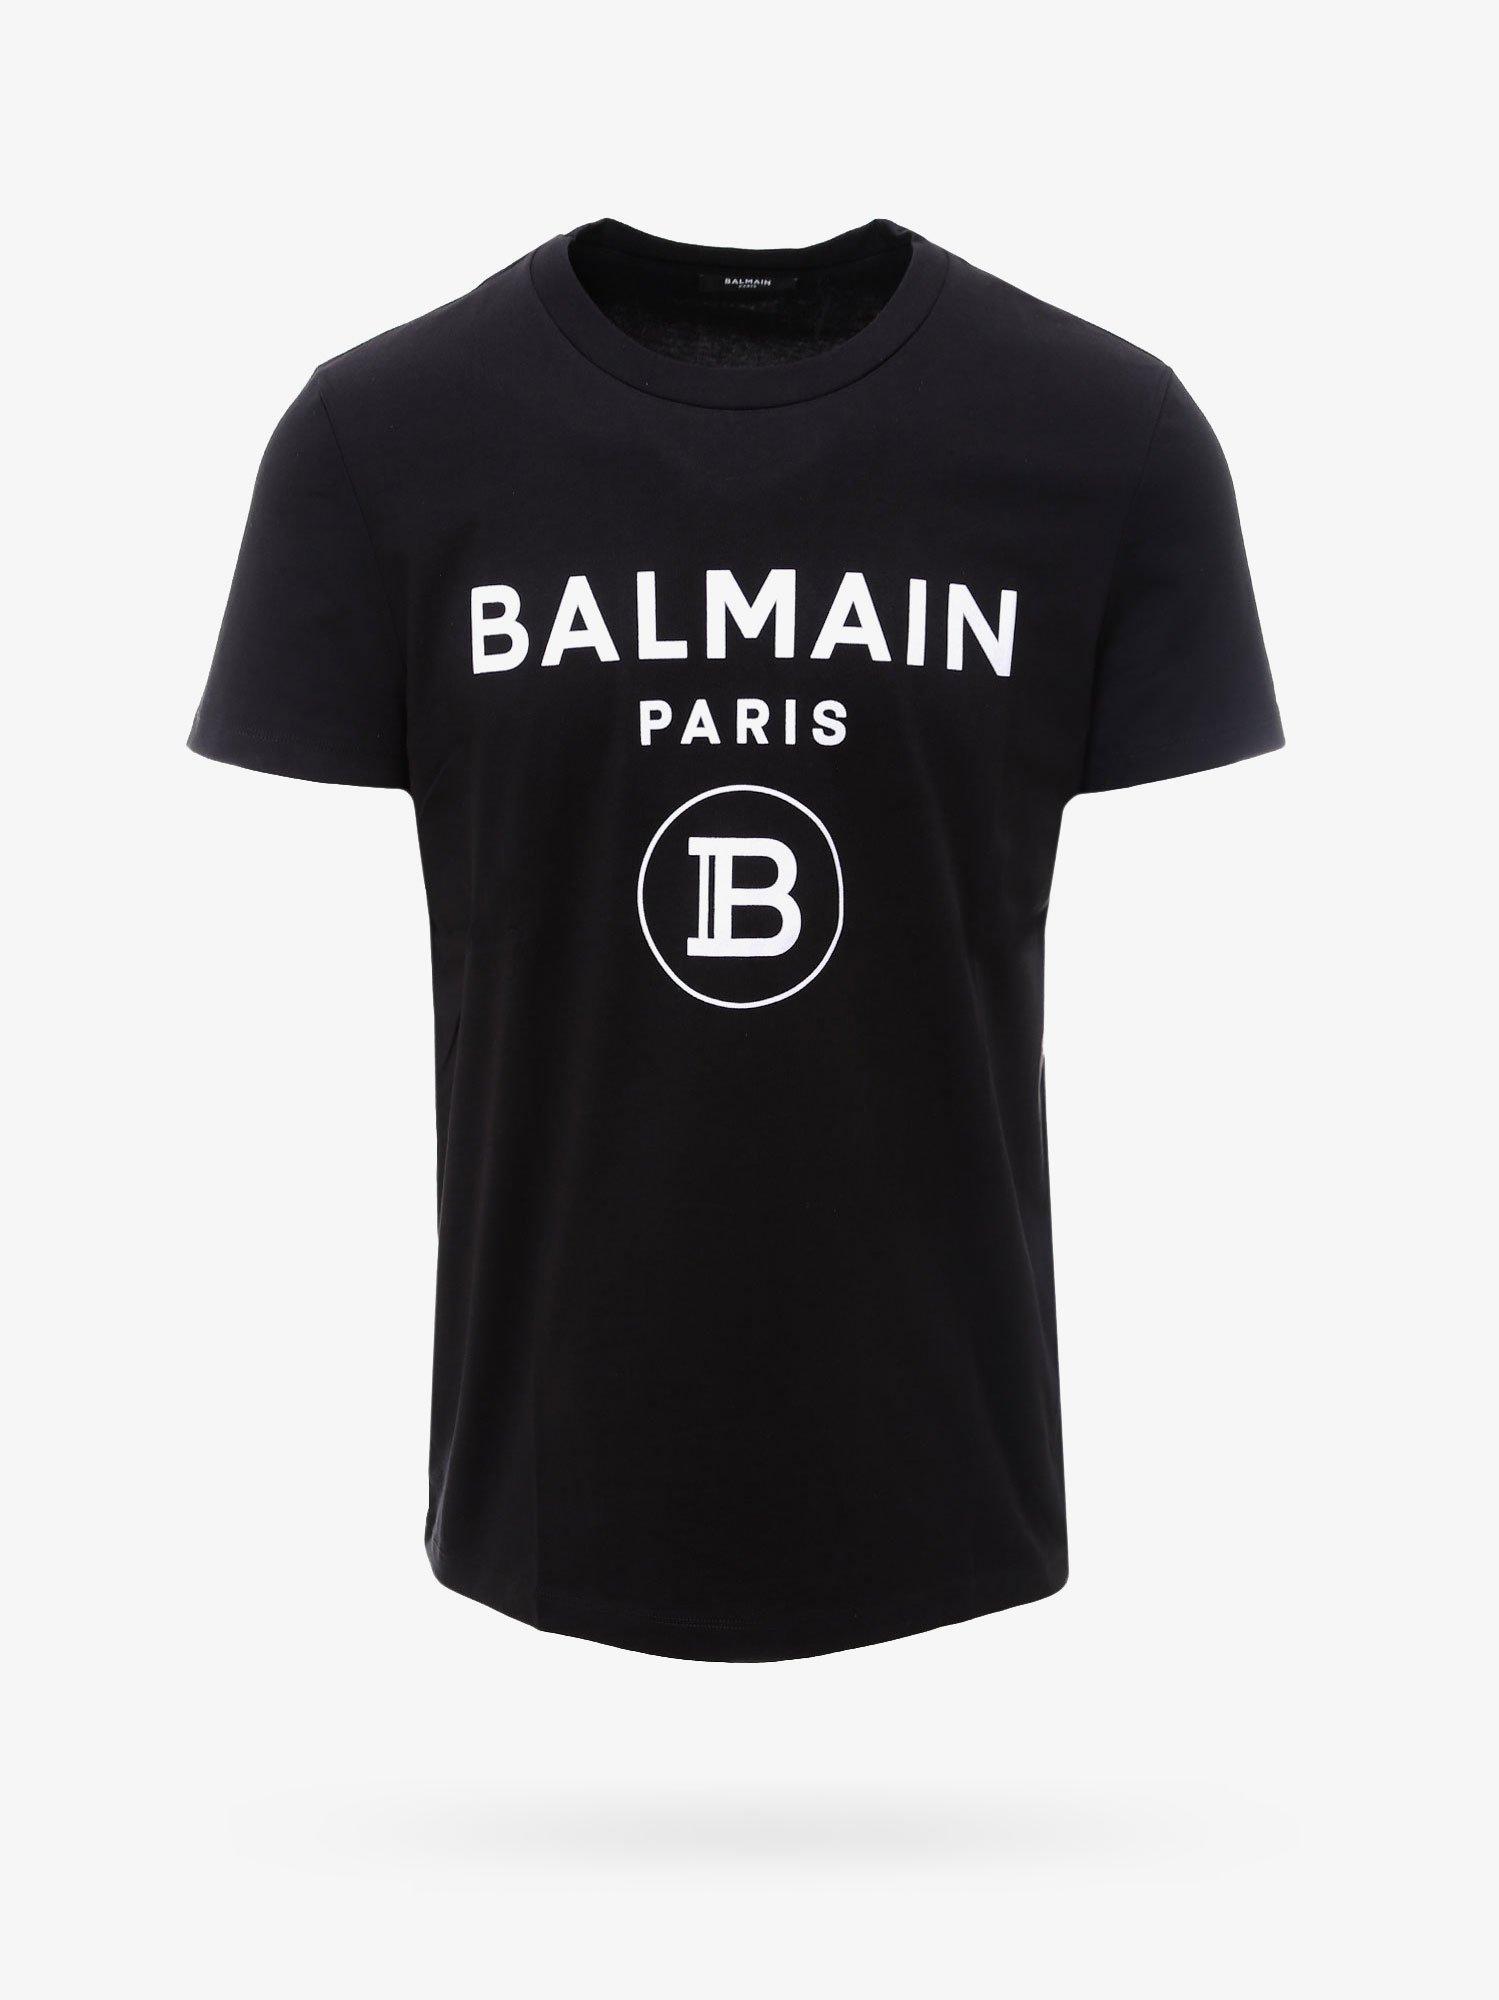 Balmain Cotton T-shirt in Black for Men - Lyst